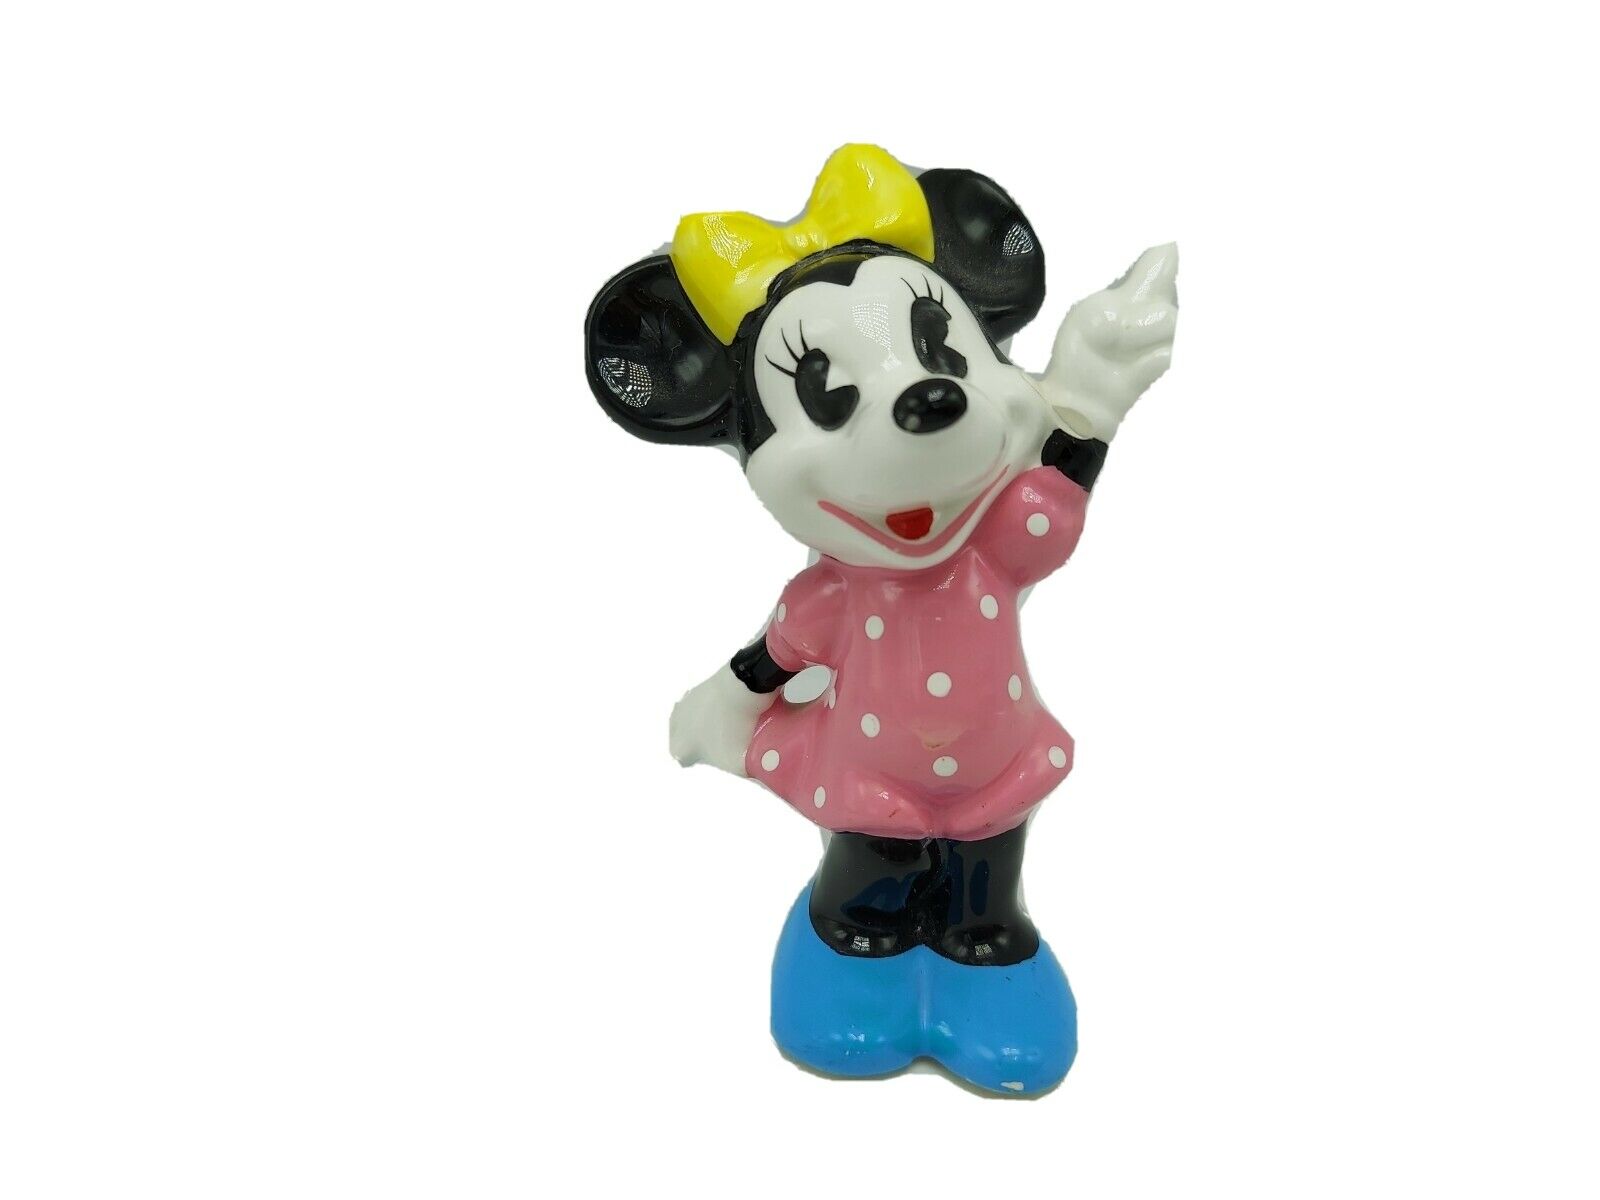 Disney's Pink Minnie Mouse Figurine